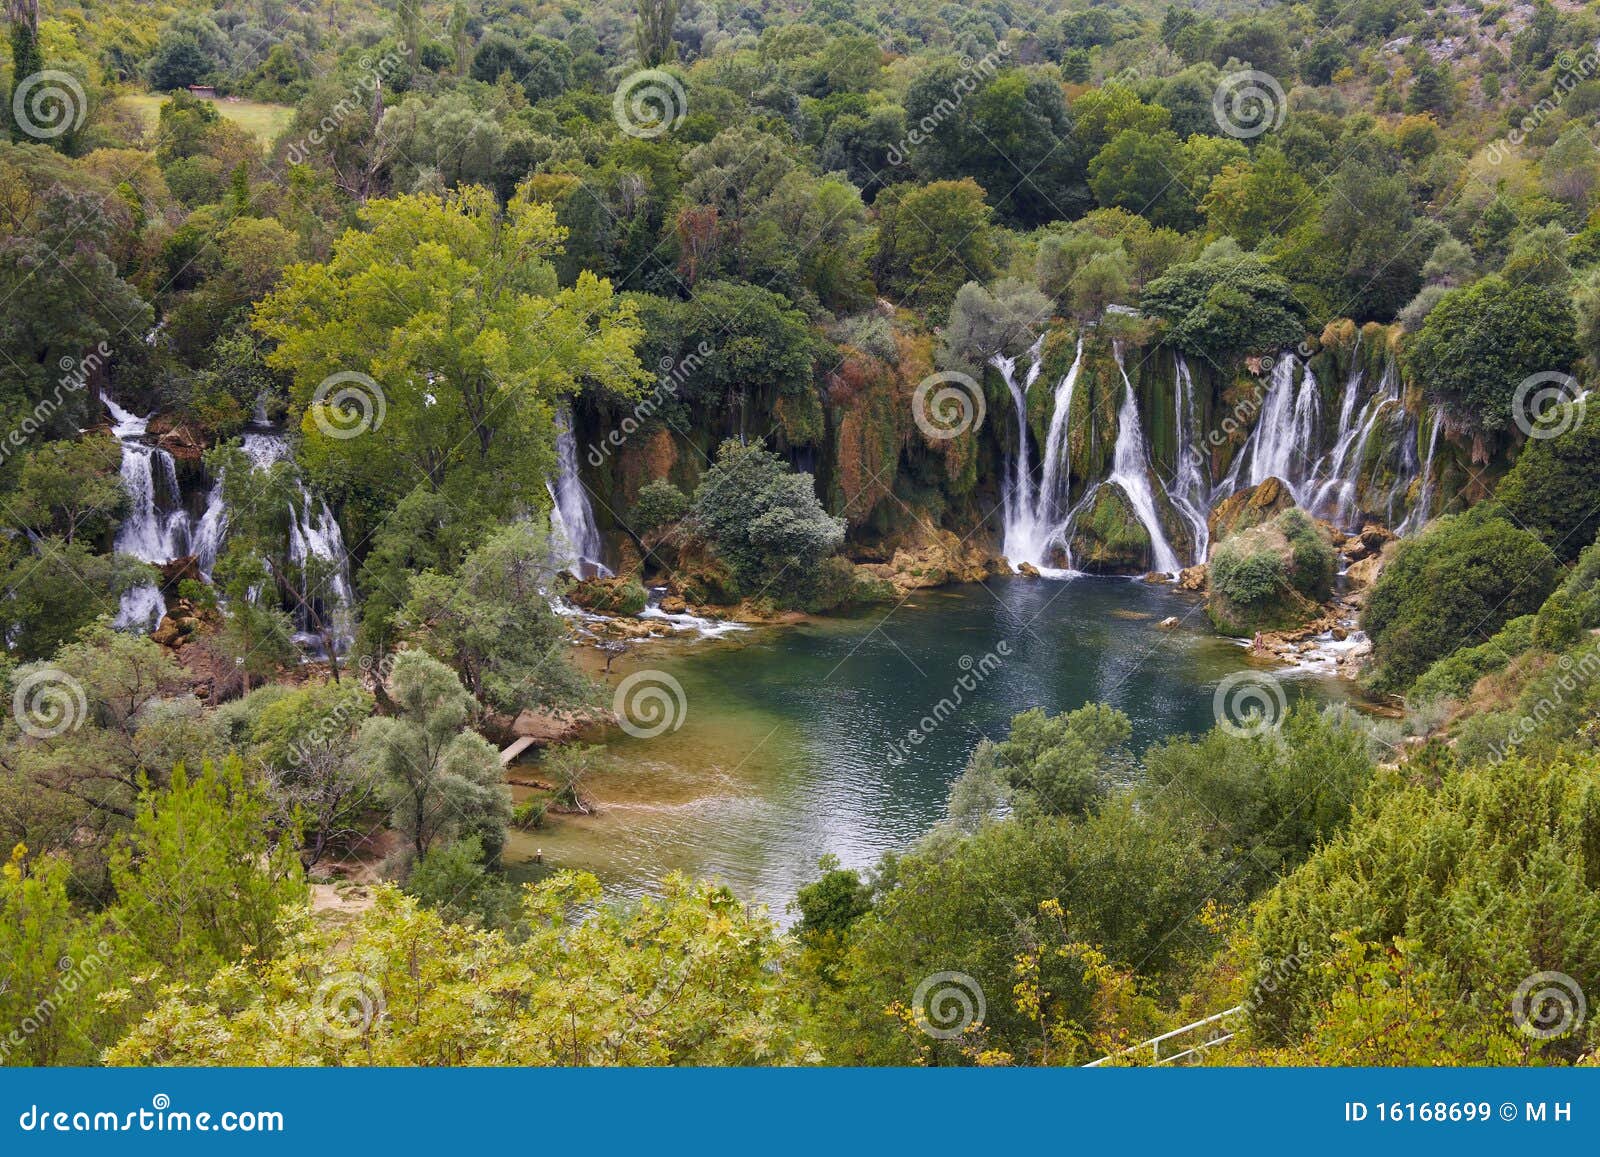 kravica waterfalls - bosnia-herzegovina